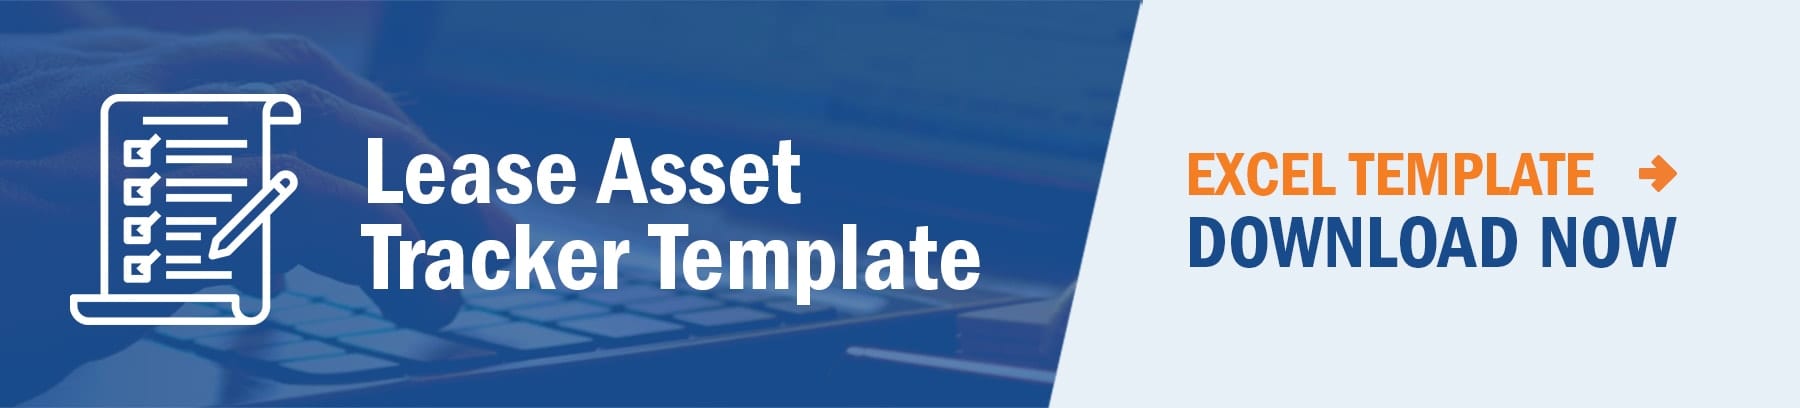 lease asset tracker template